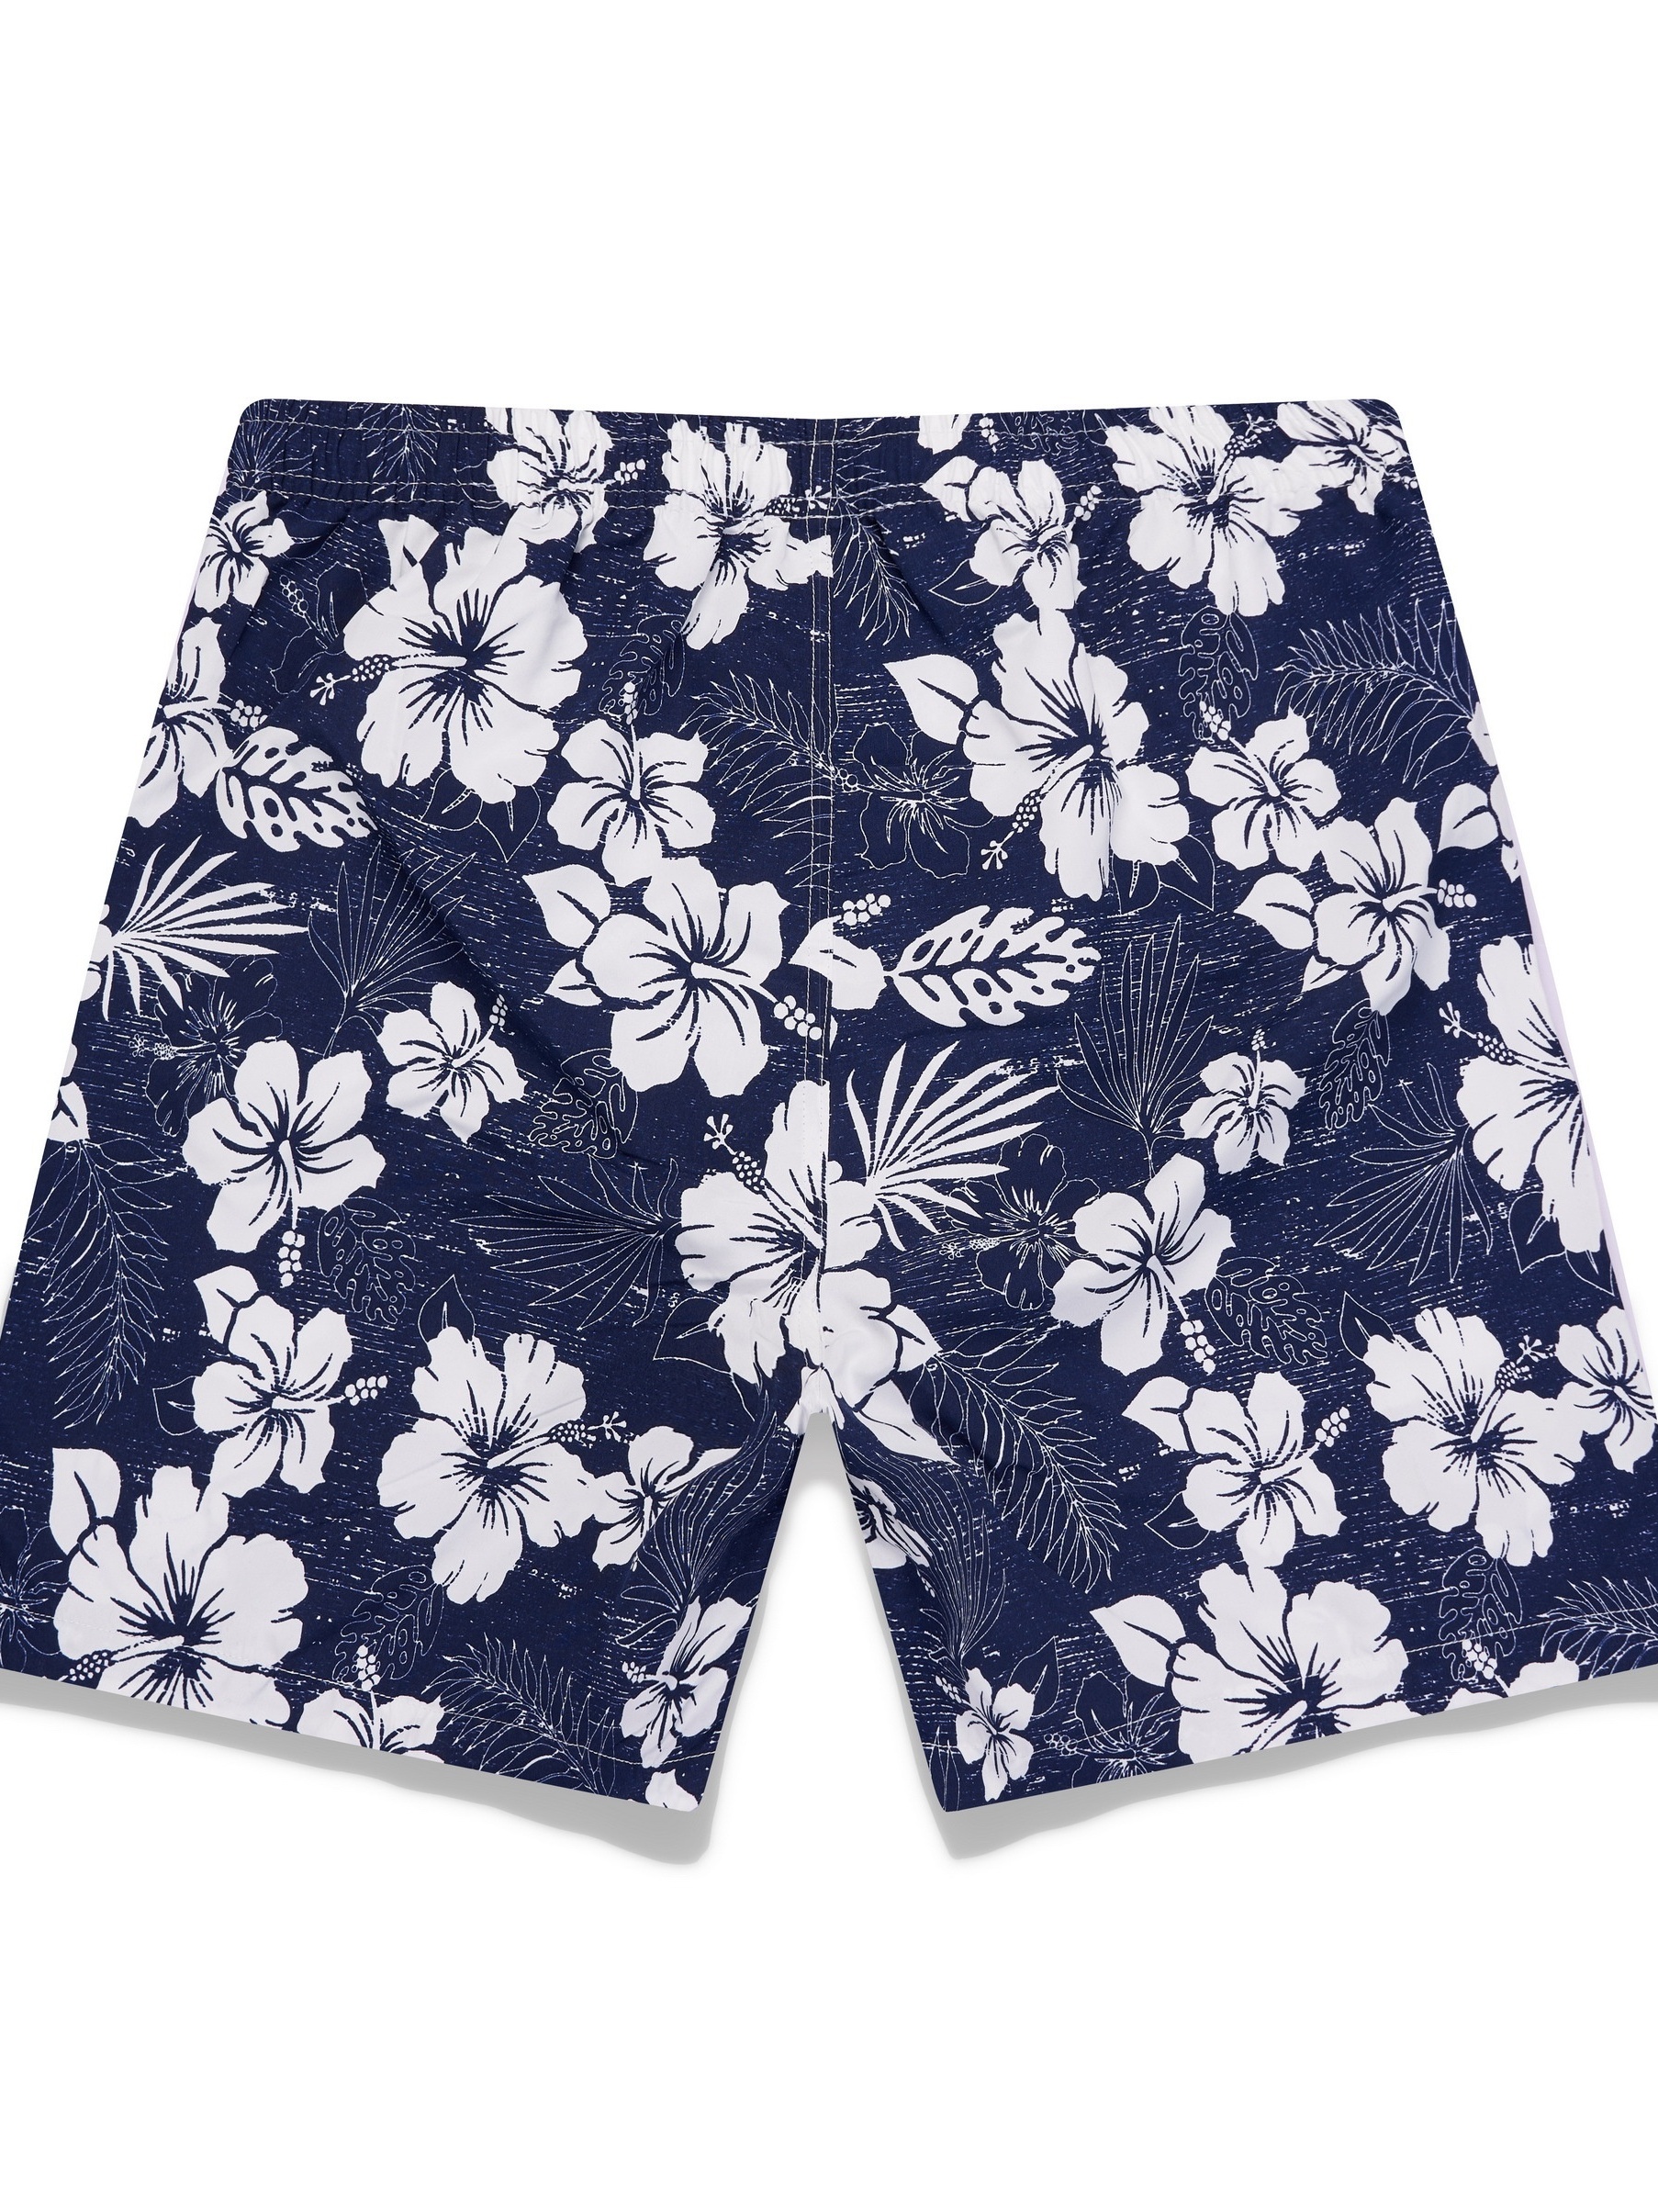 Mesh shorts - Light blue/Floral - Men